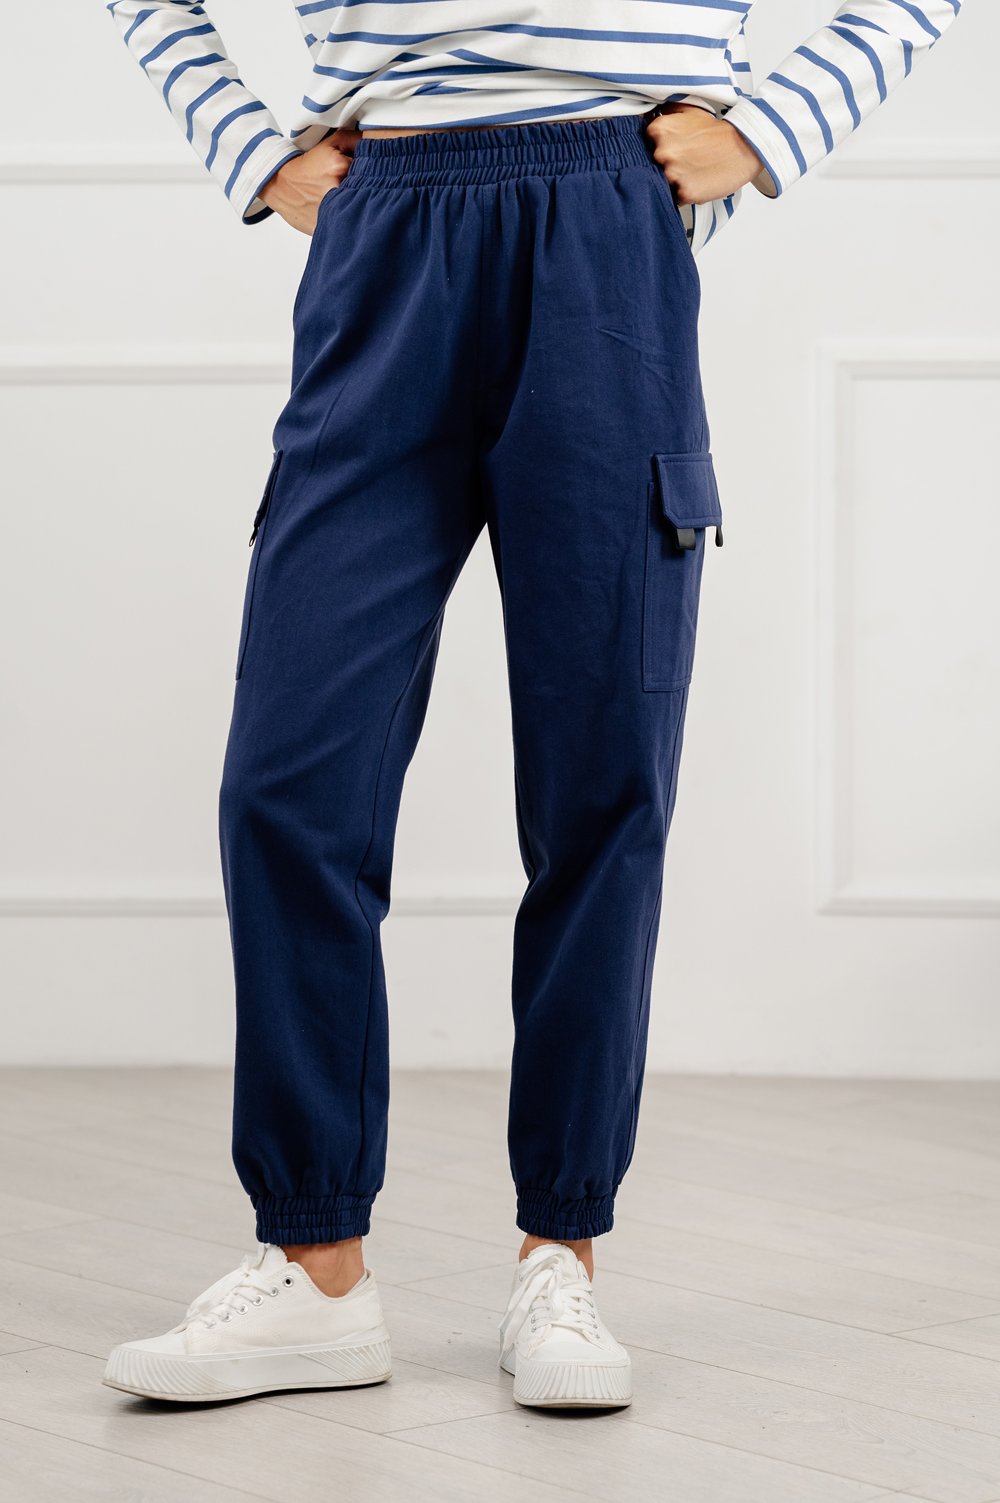 Casual Plain Cargo Pants Navy Blue Women's Pants (Women's)